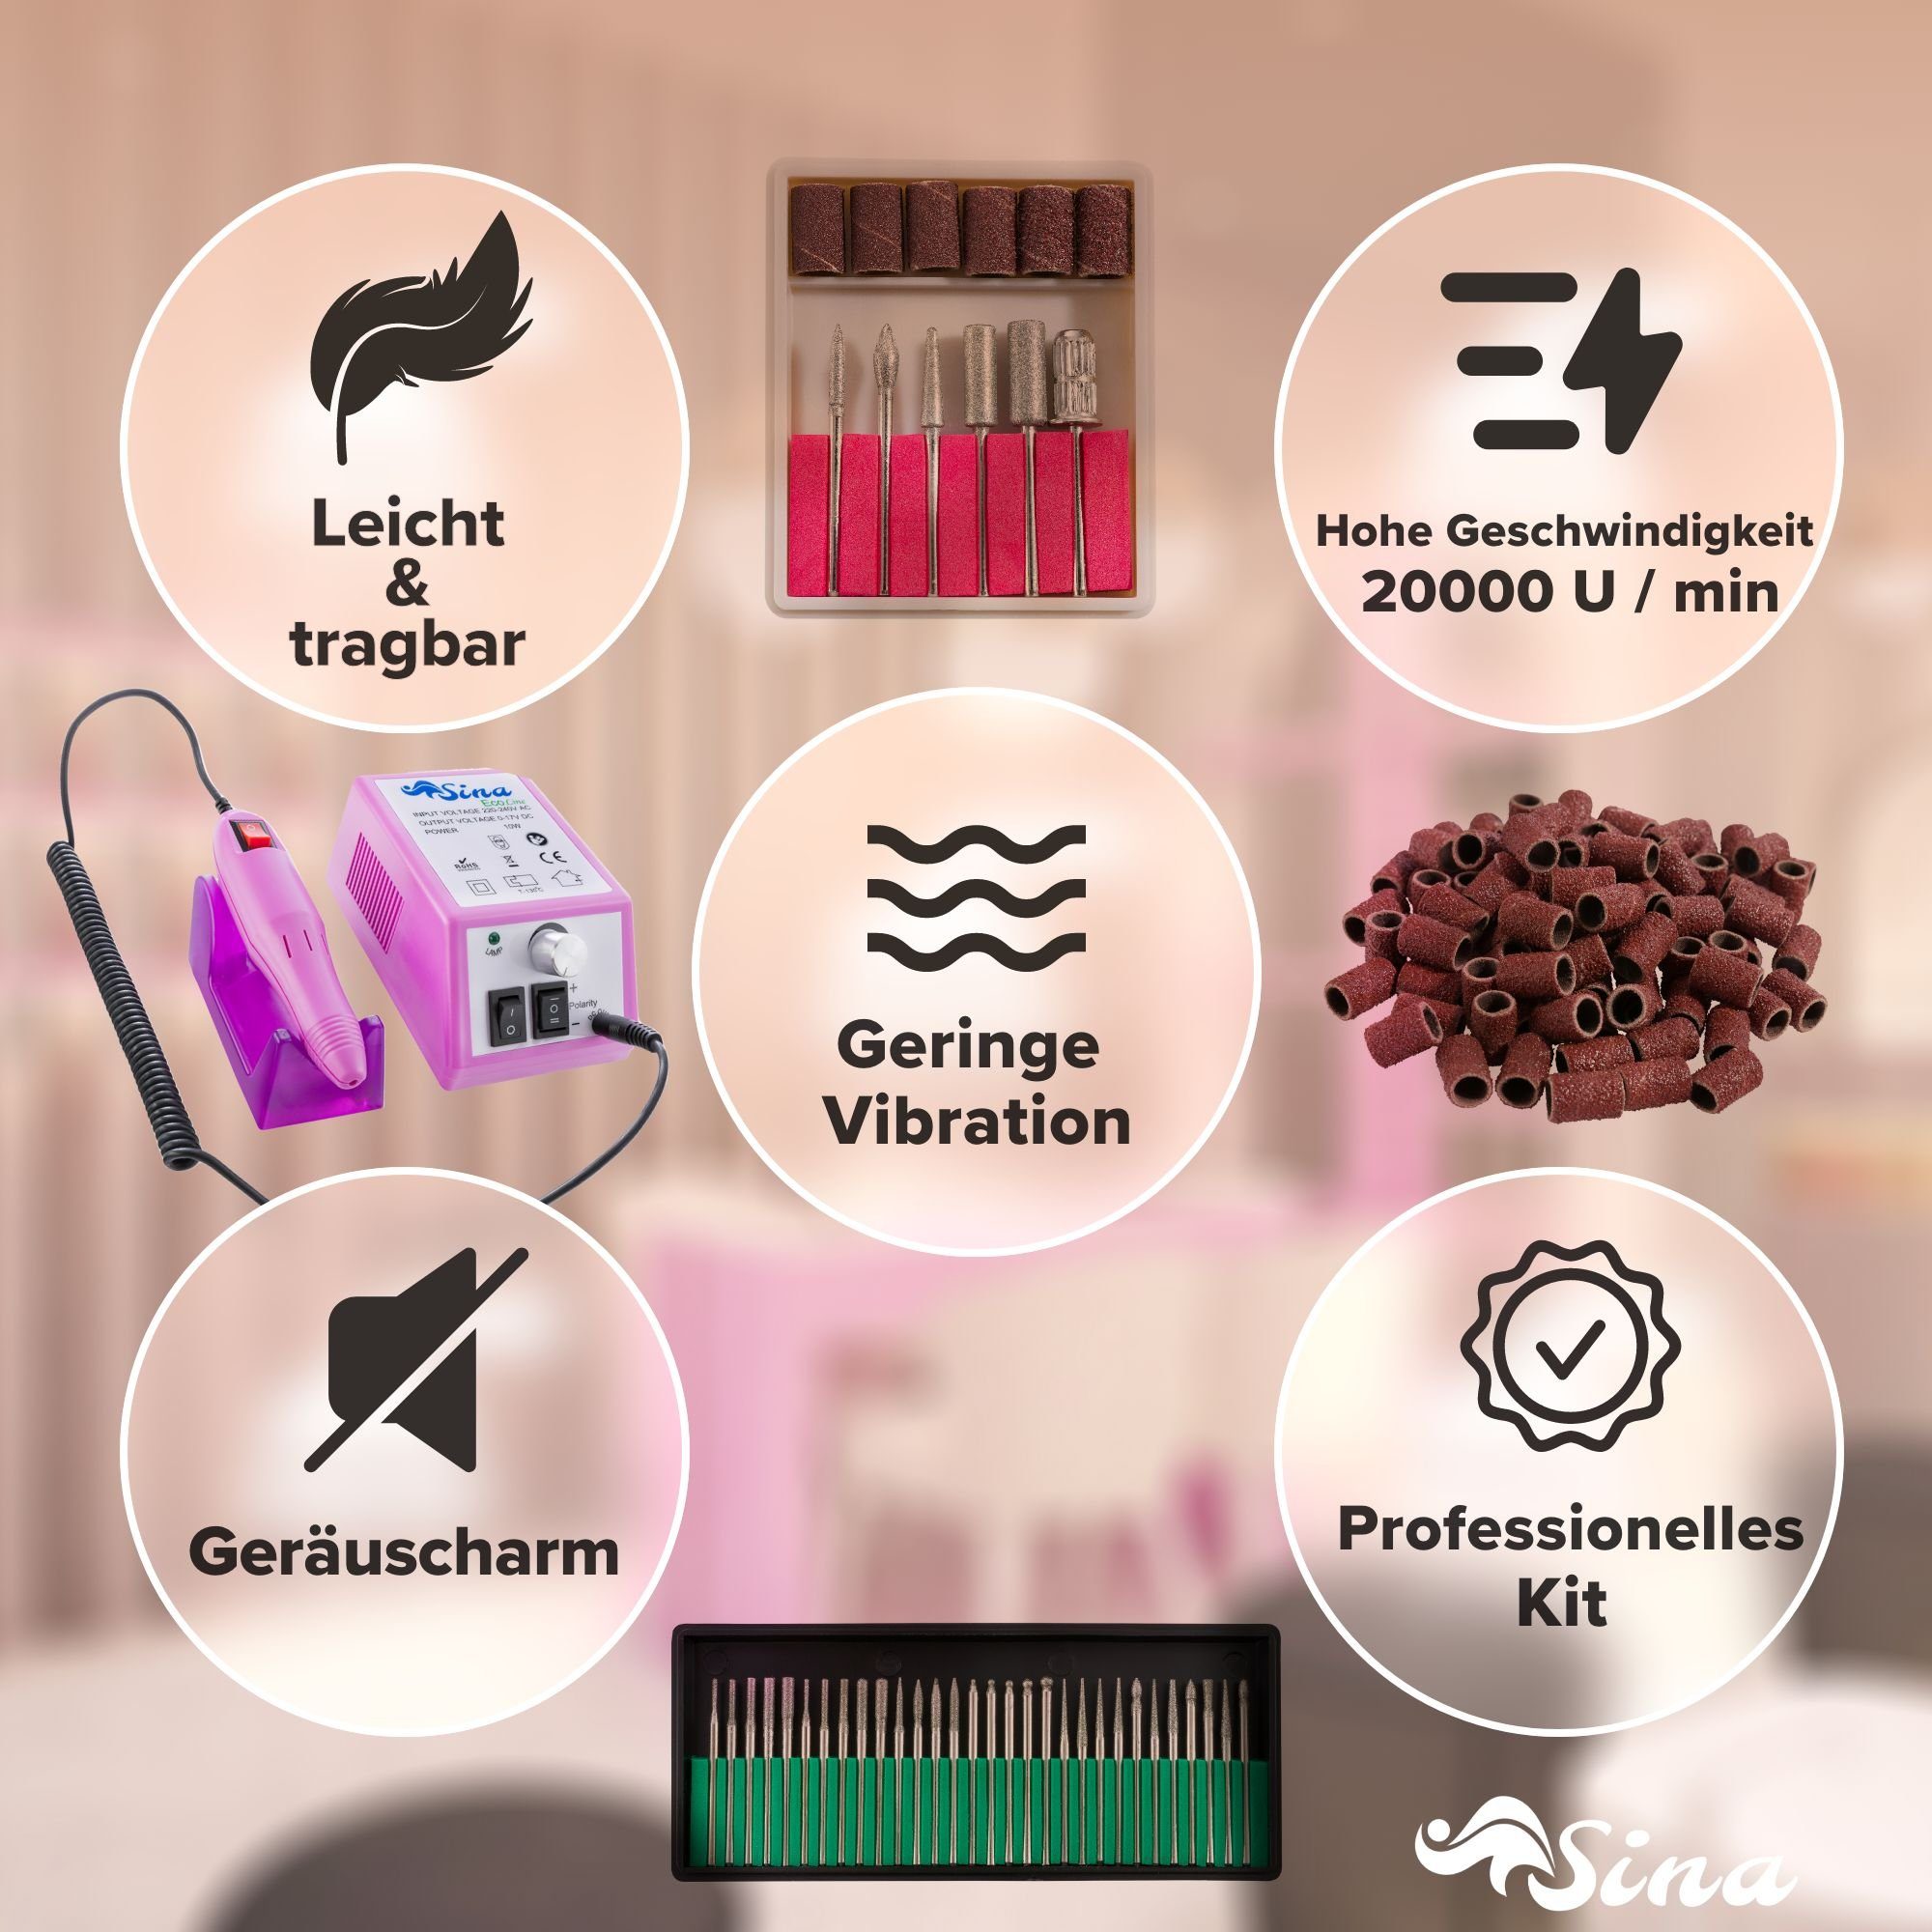 Arebos Beauty-Multigerät Nagelfräser Elektrische Nagelfeile, Pink, Beauty-Multigerät